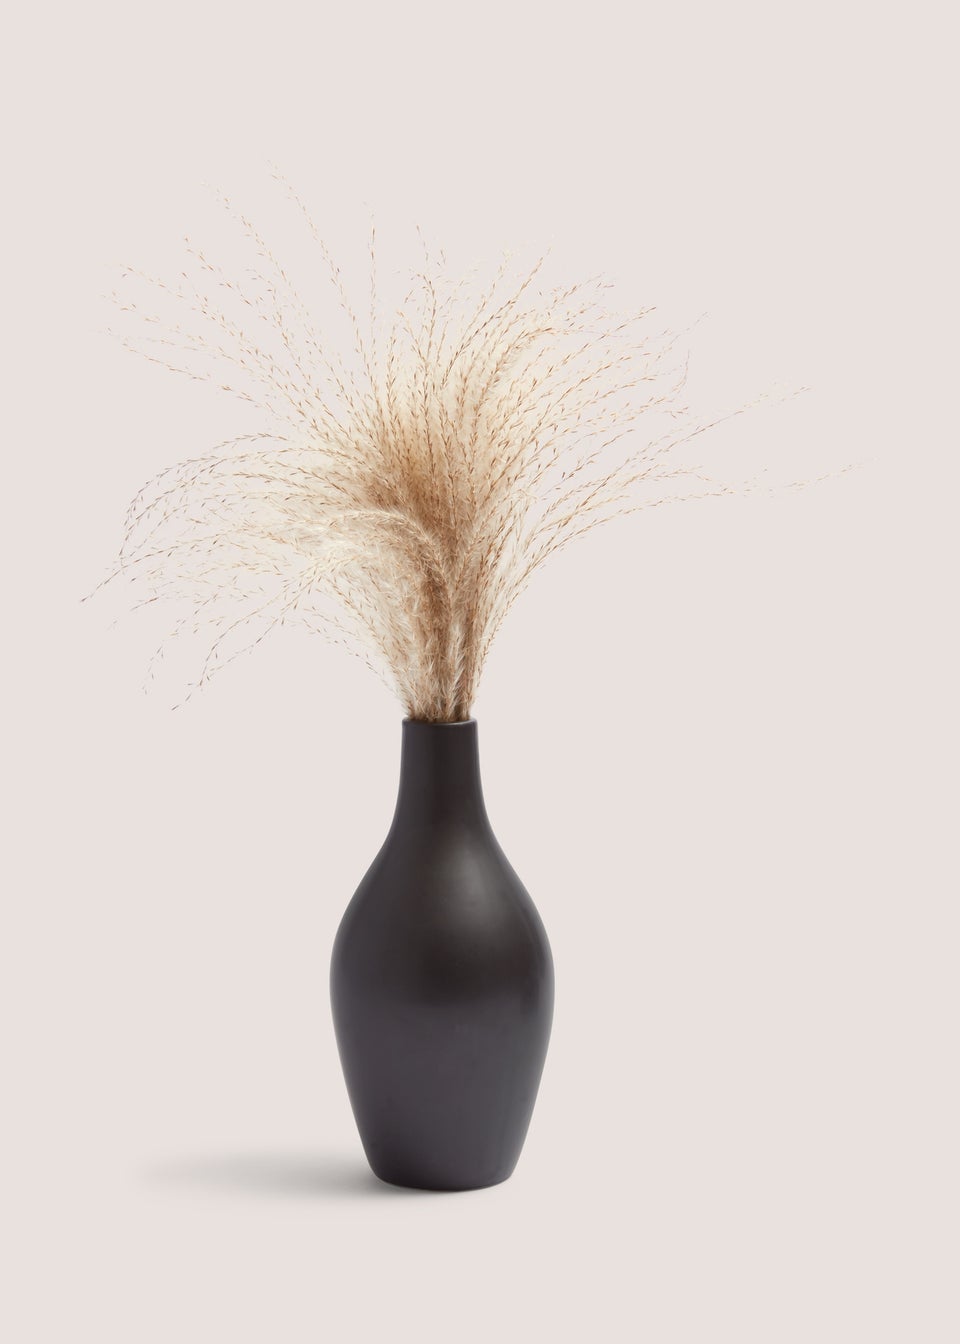 Black Vase with Pampas (40cm x 11cm x 11cm)